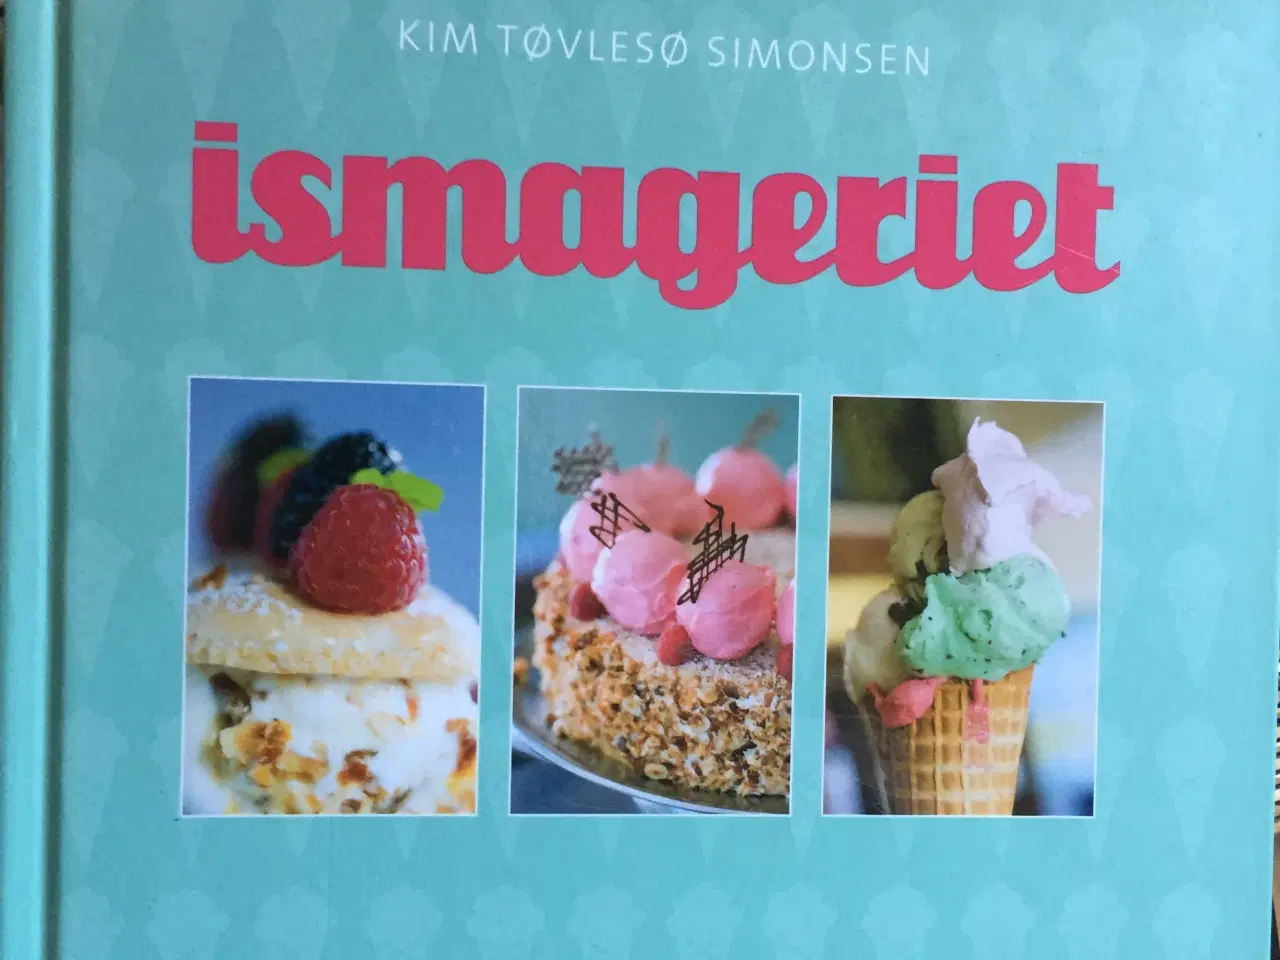 Billede 1 - ISMAGERIET - Kim TøvIesø Simonsen